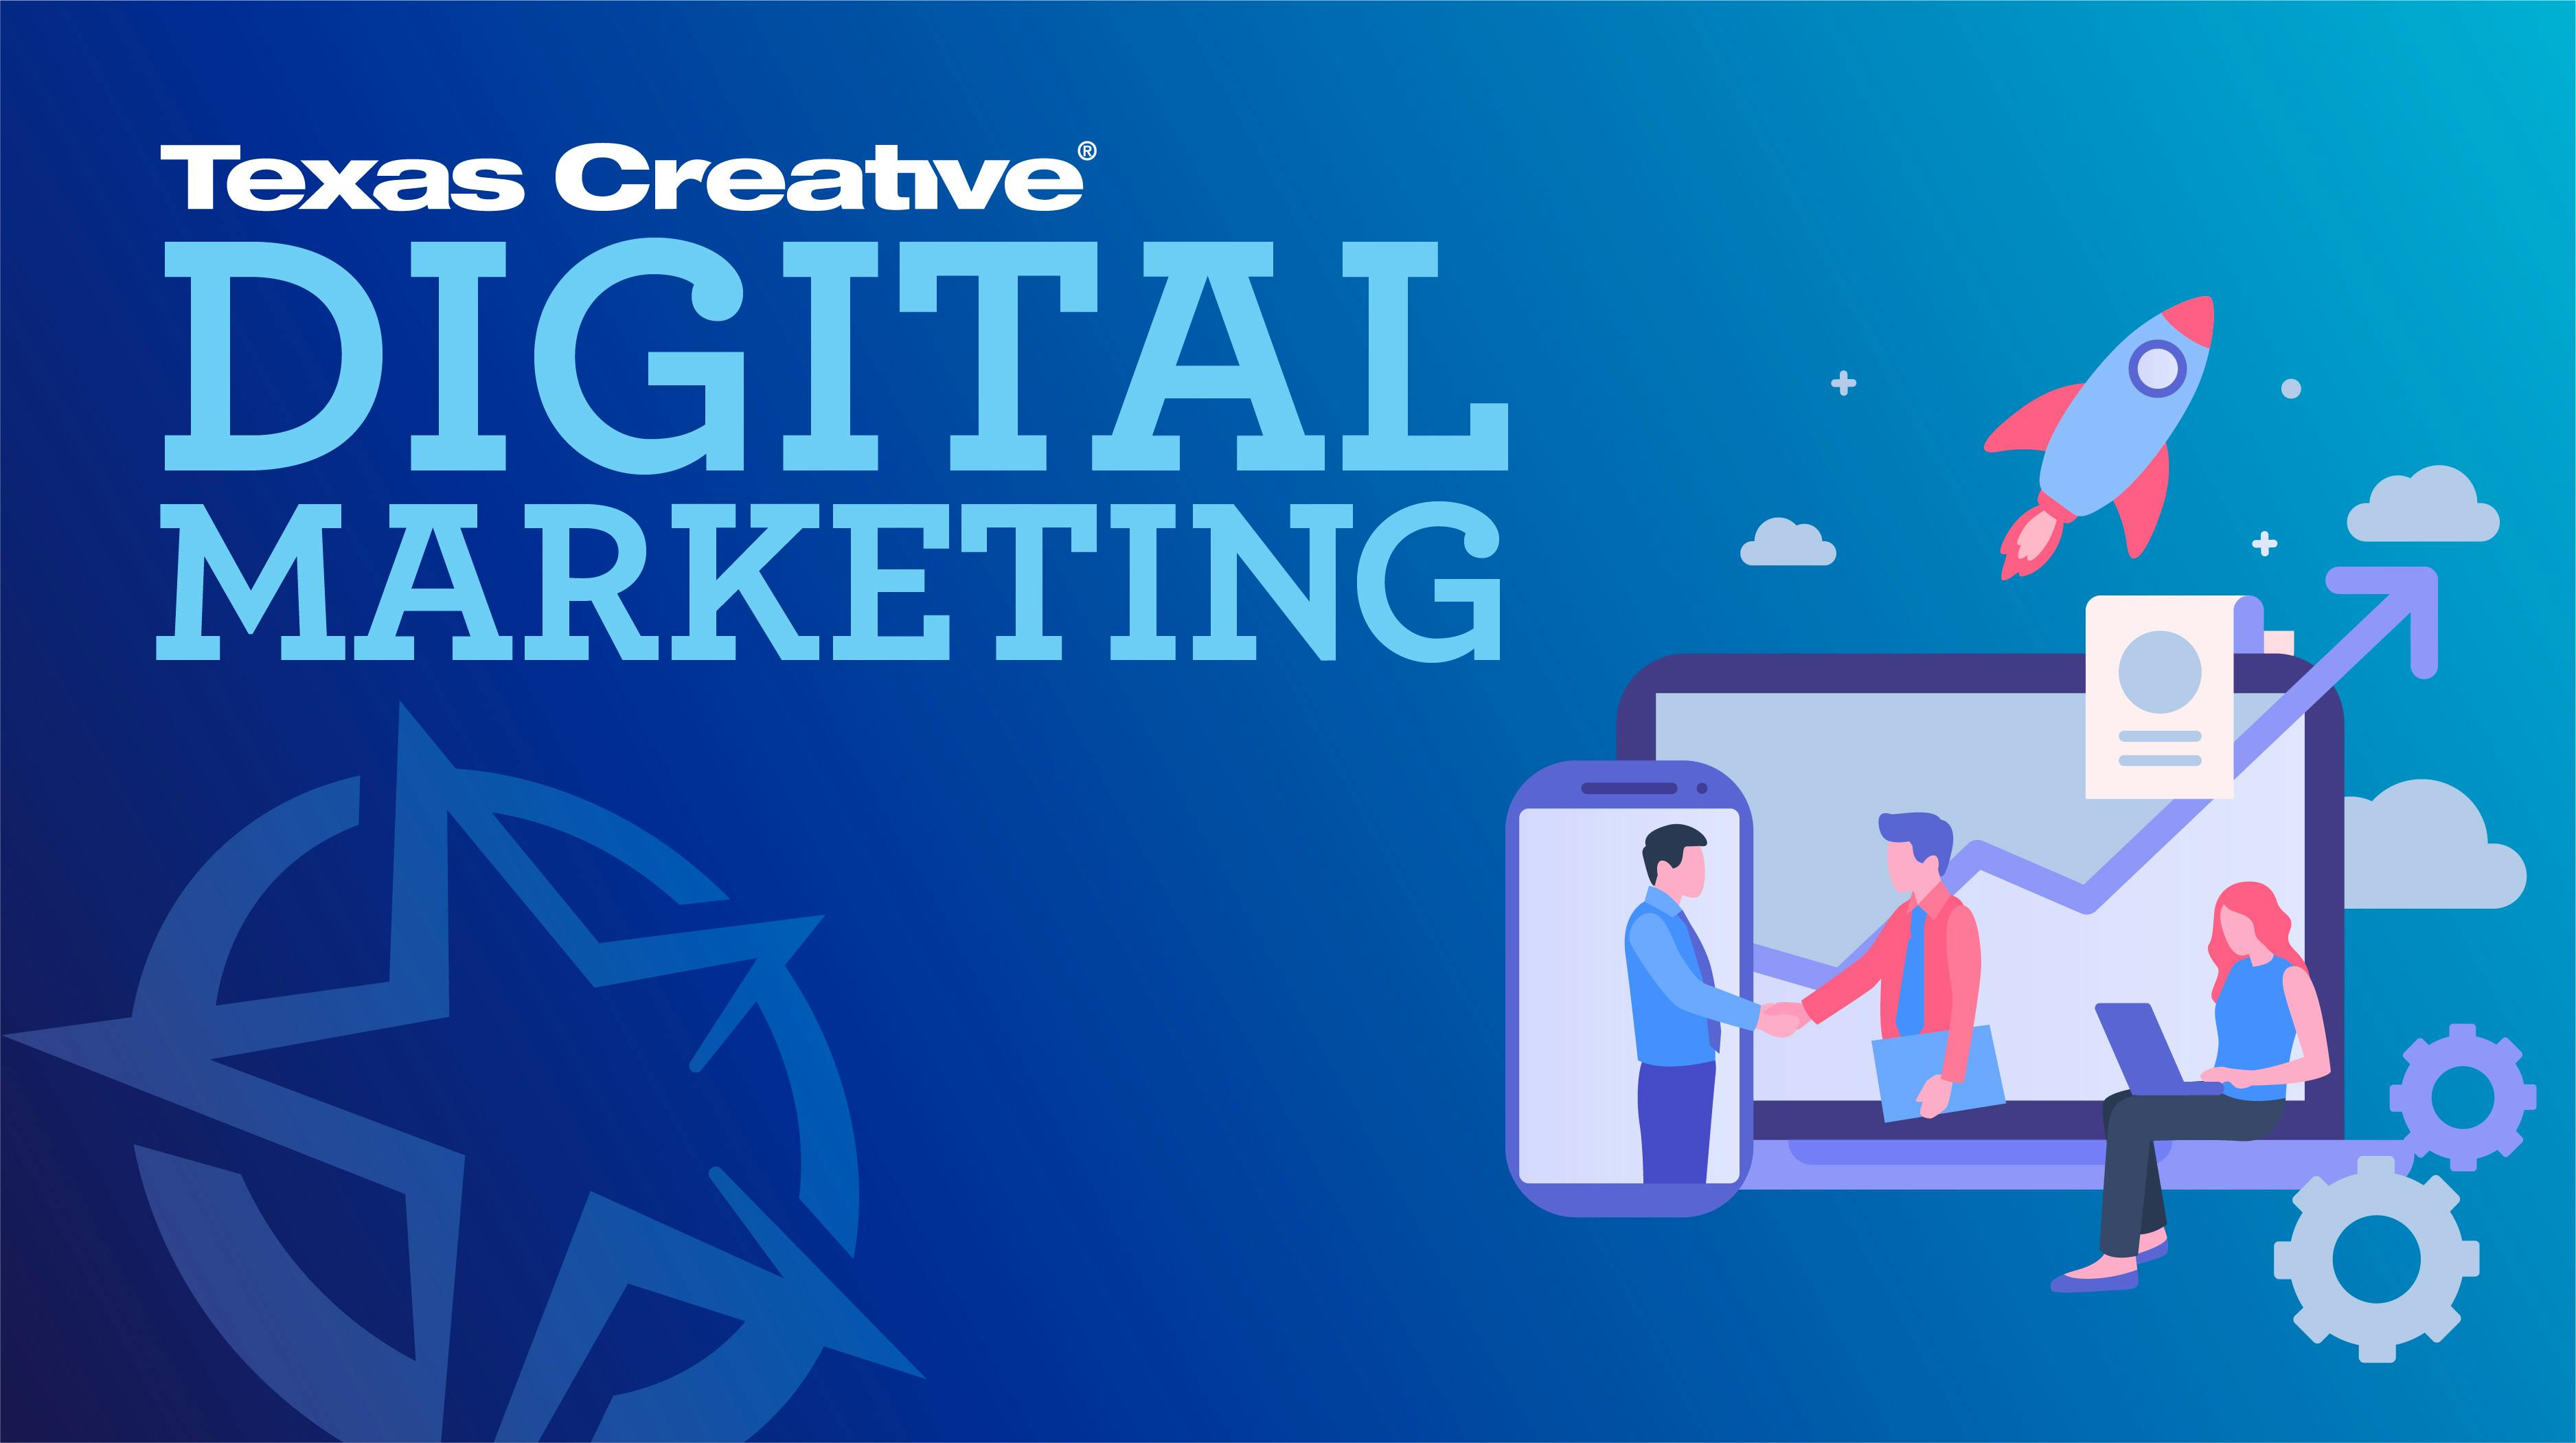 Texas Creative Digital Marketing  